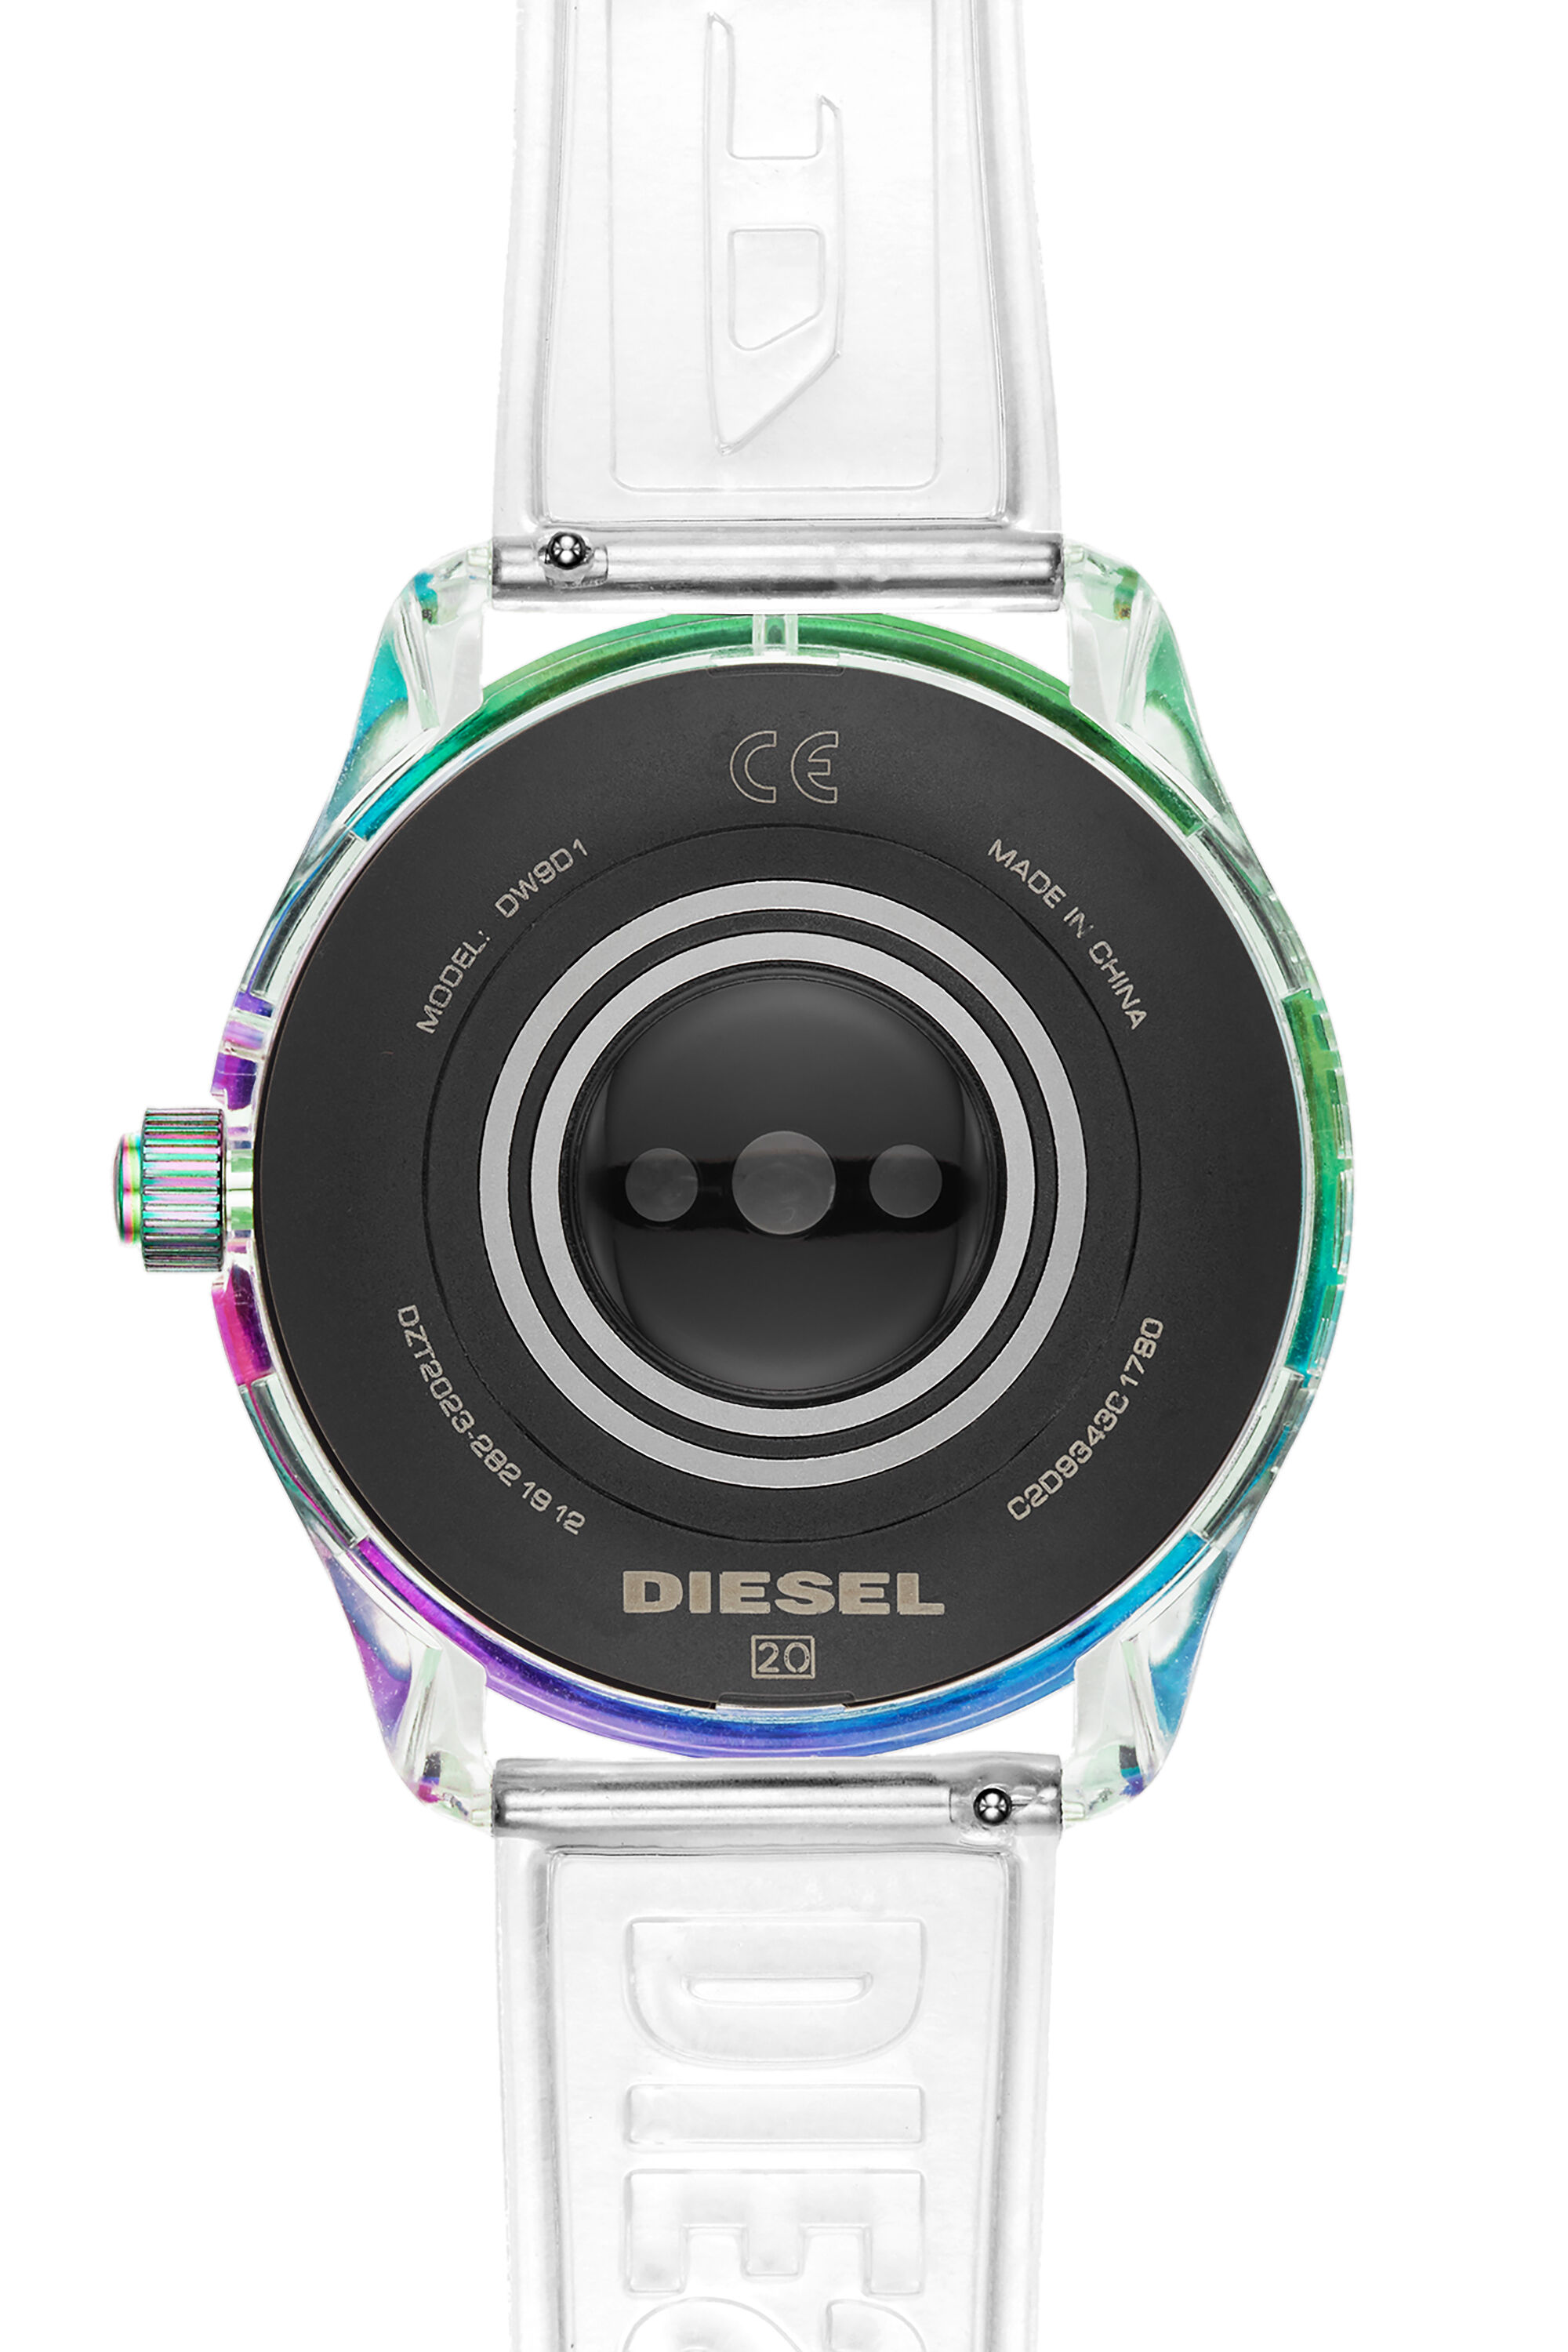 Diesel - DT2023, White - Image 3